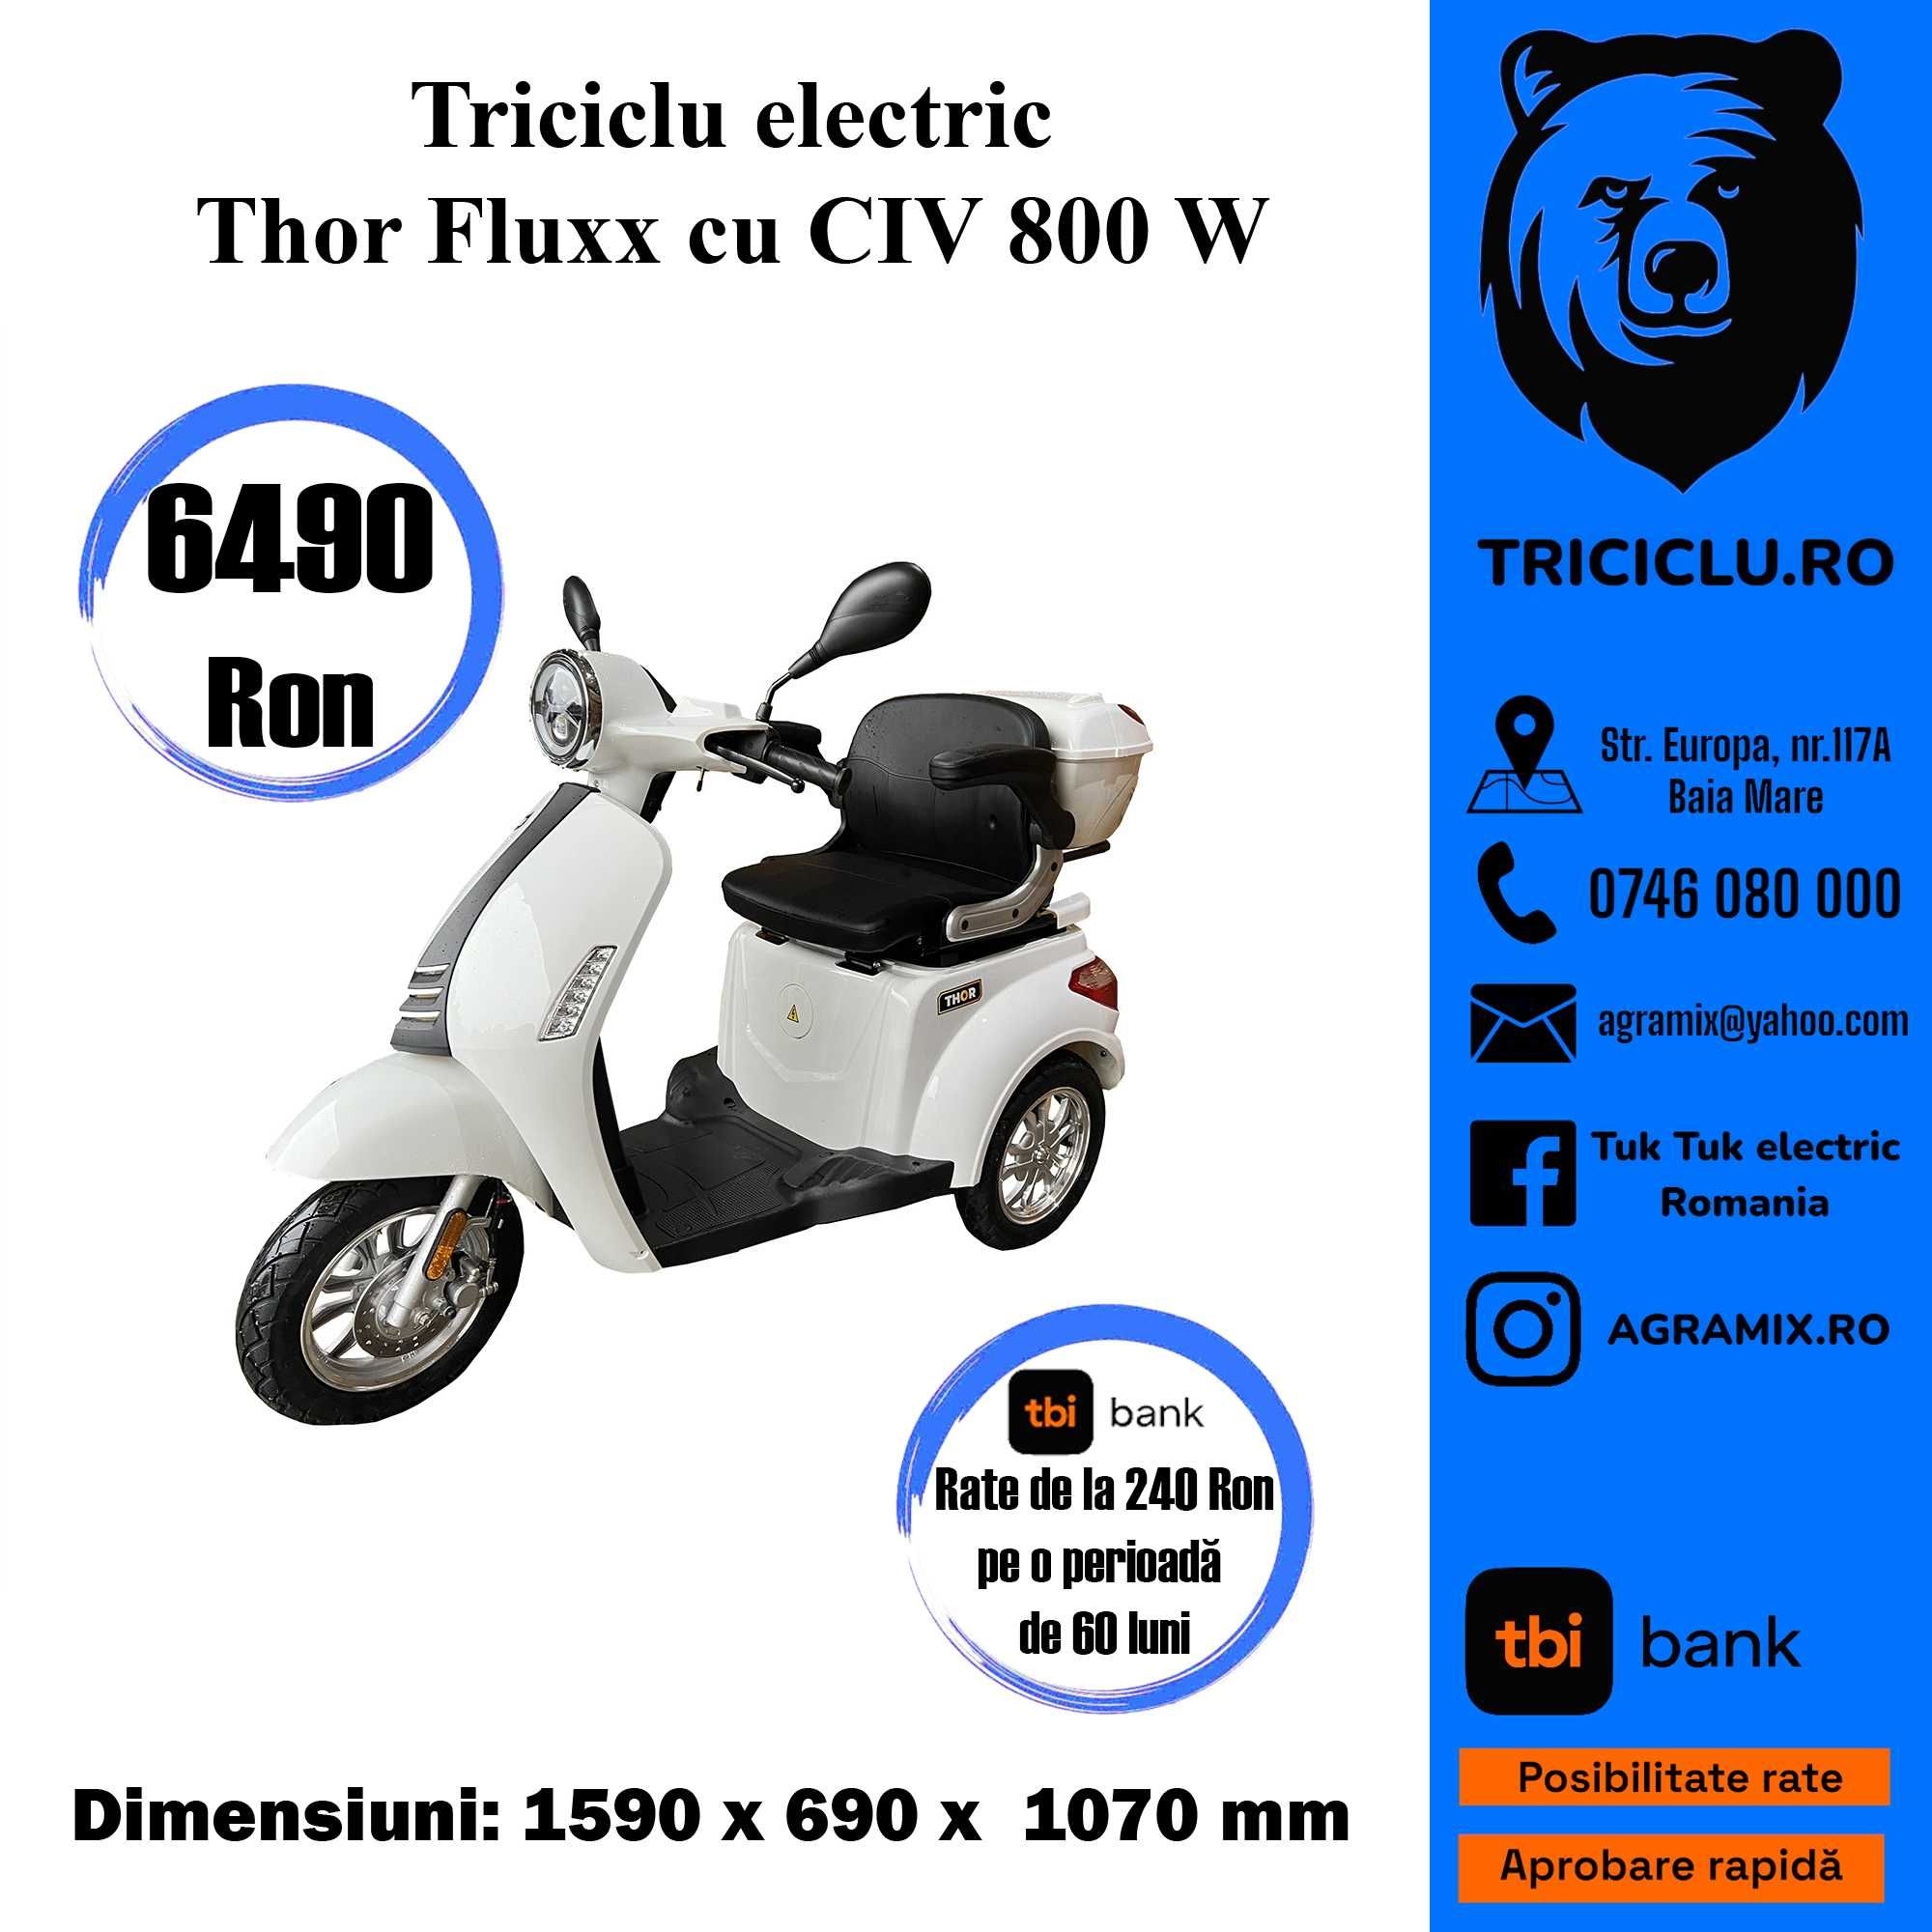 Triciclu, scuter electric NOU Thor Fluxx Agramix 800W